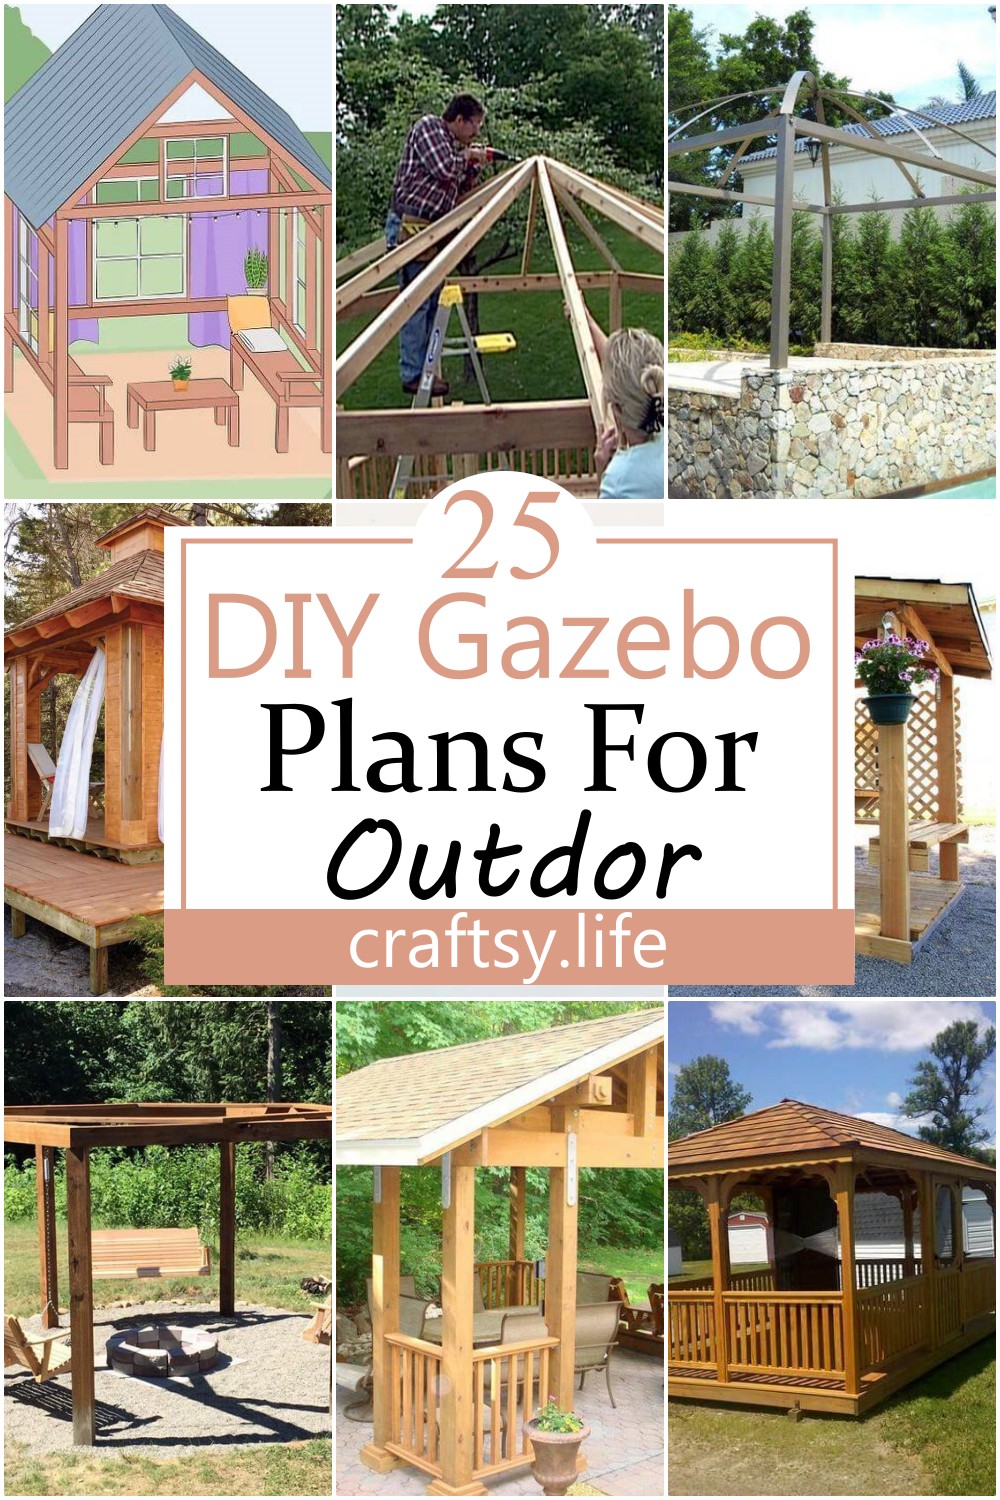 DIY Gazebo Plans For Outdoor